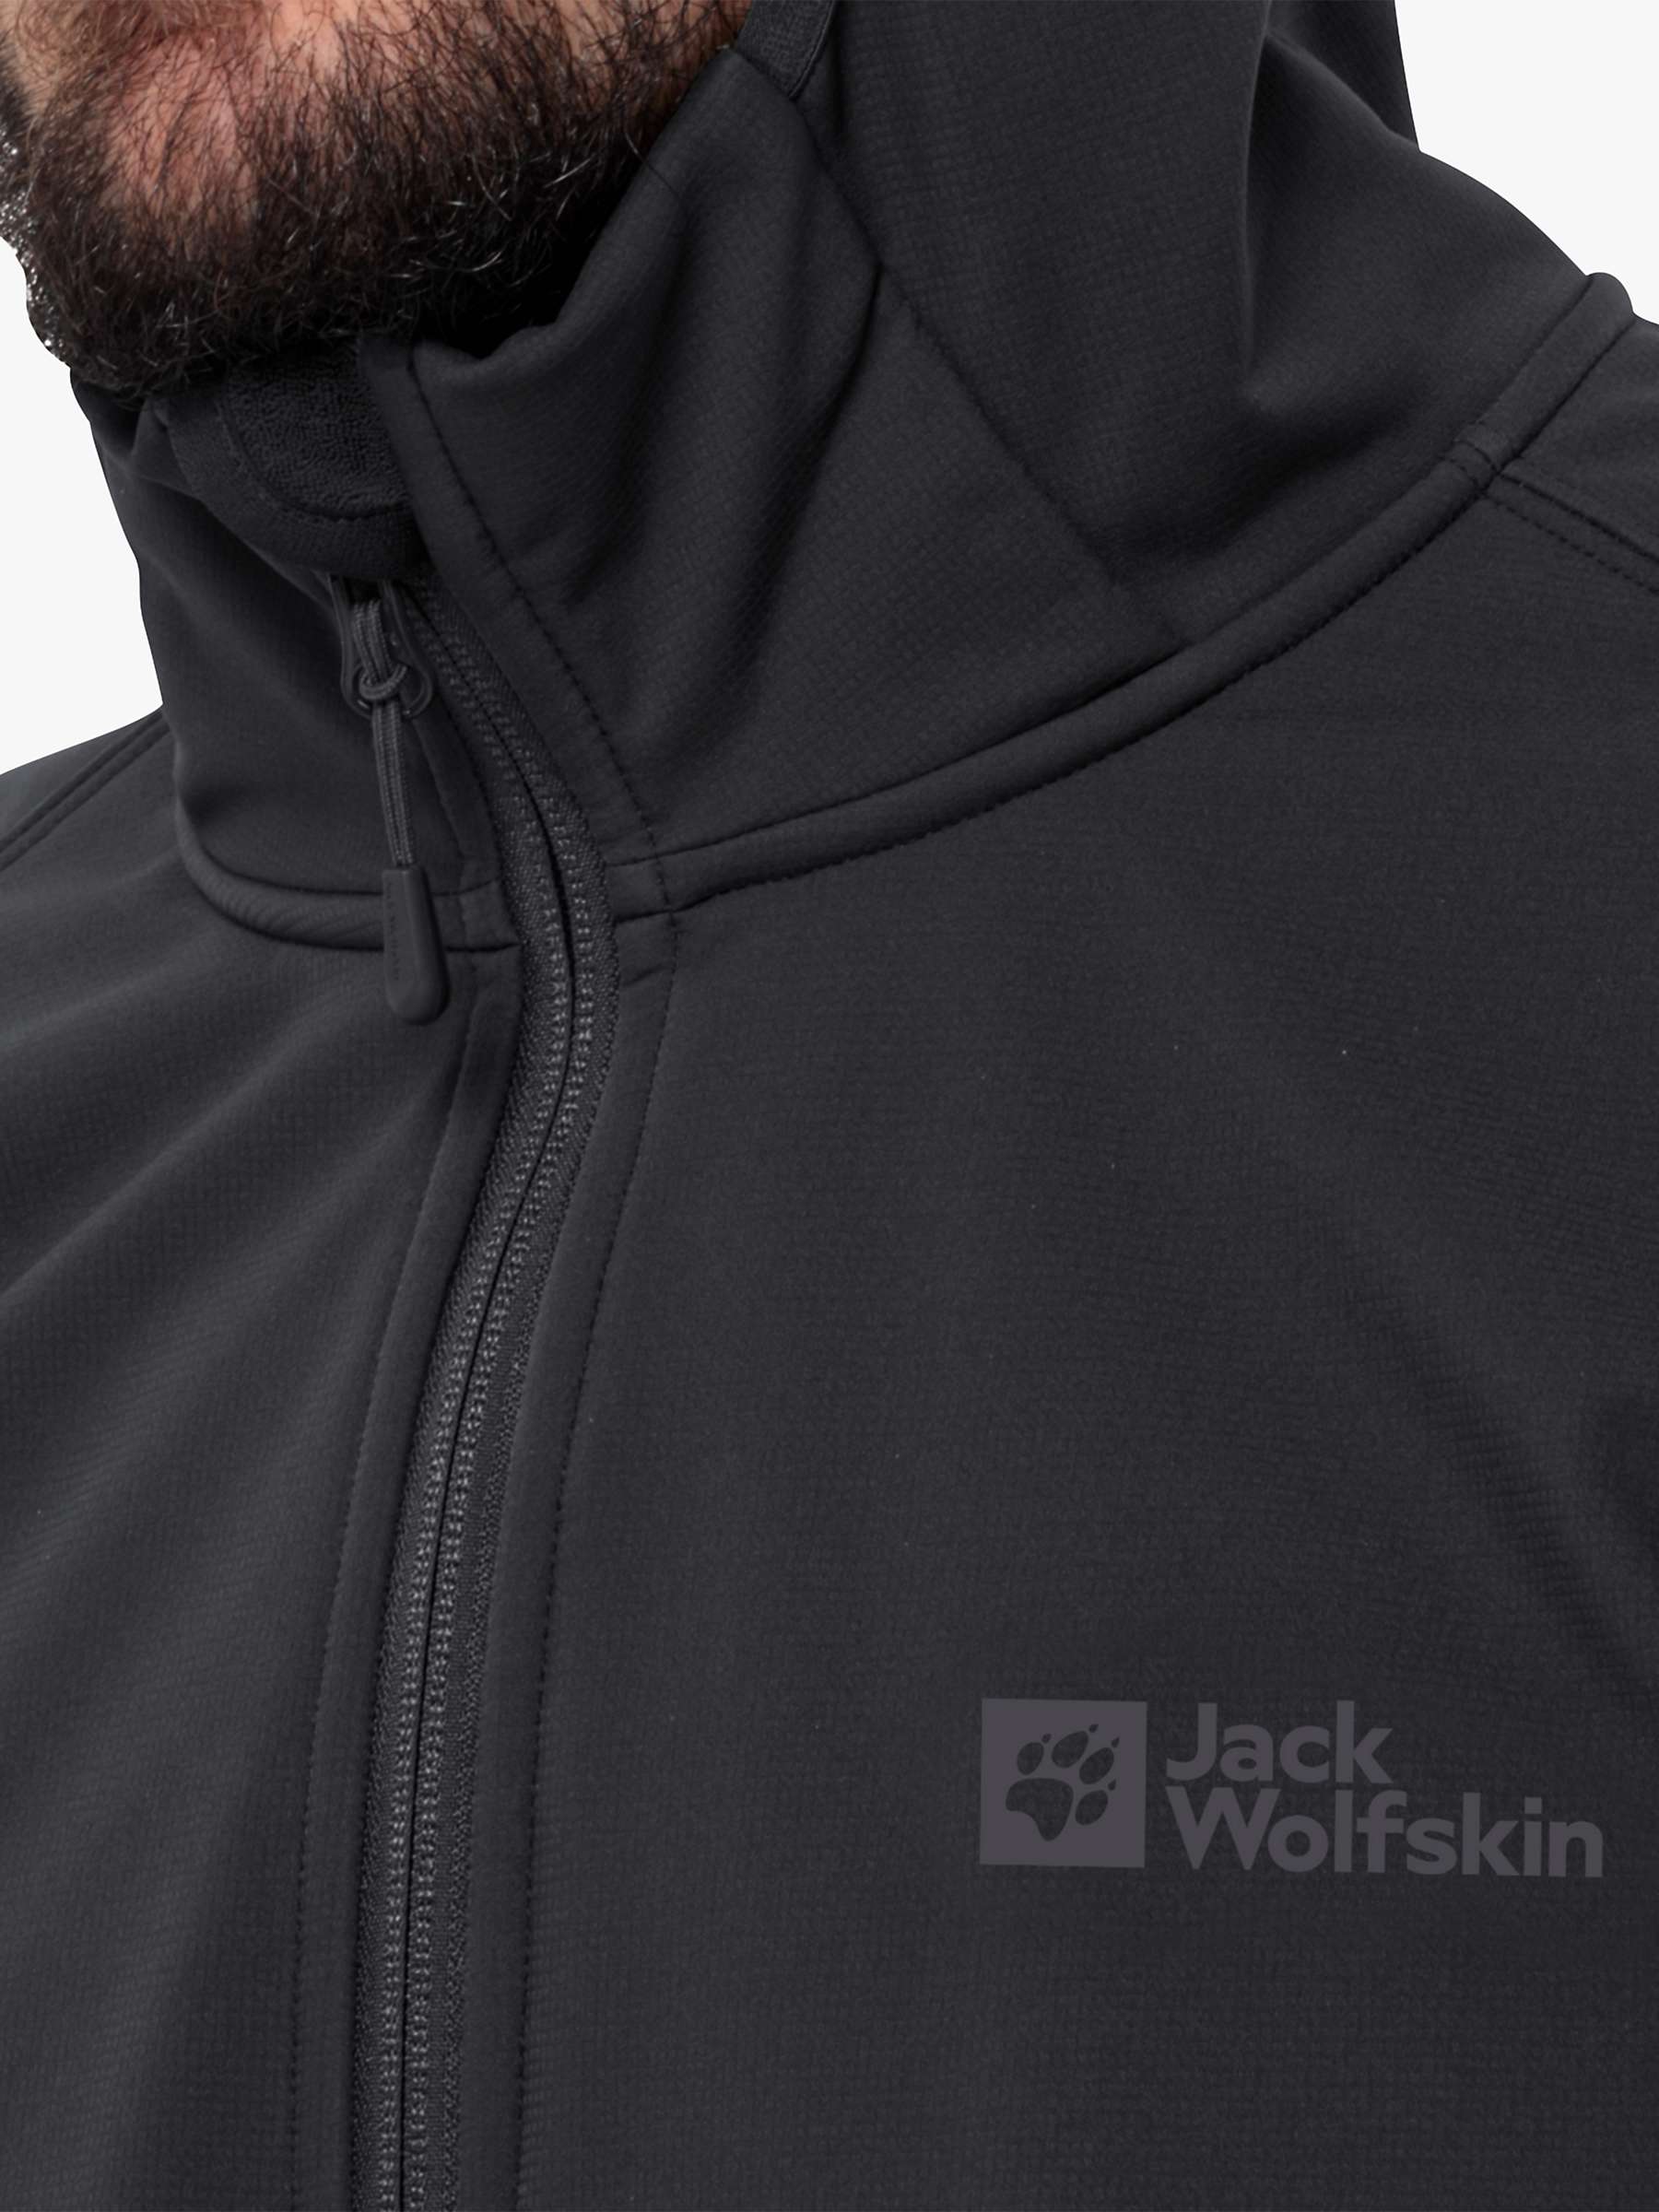 Buy Jack Wolfskin Bornberg Men's Softshell Jacket Online at johnlewis.com